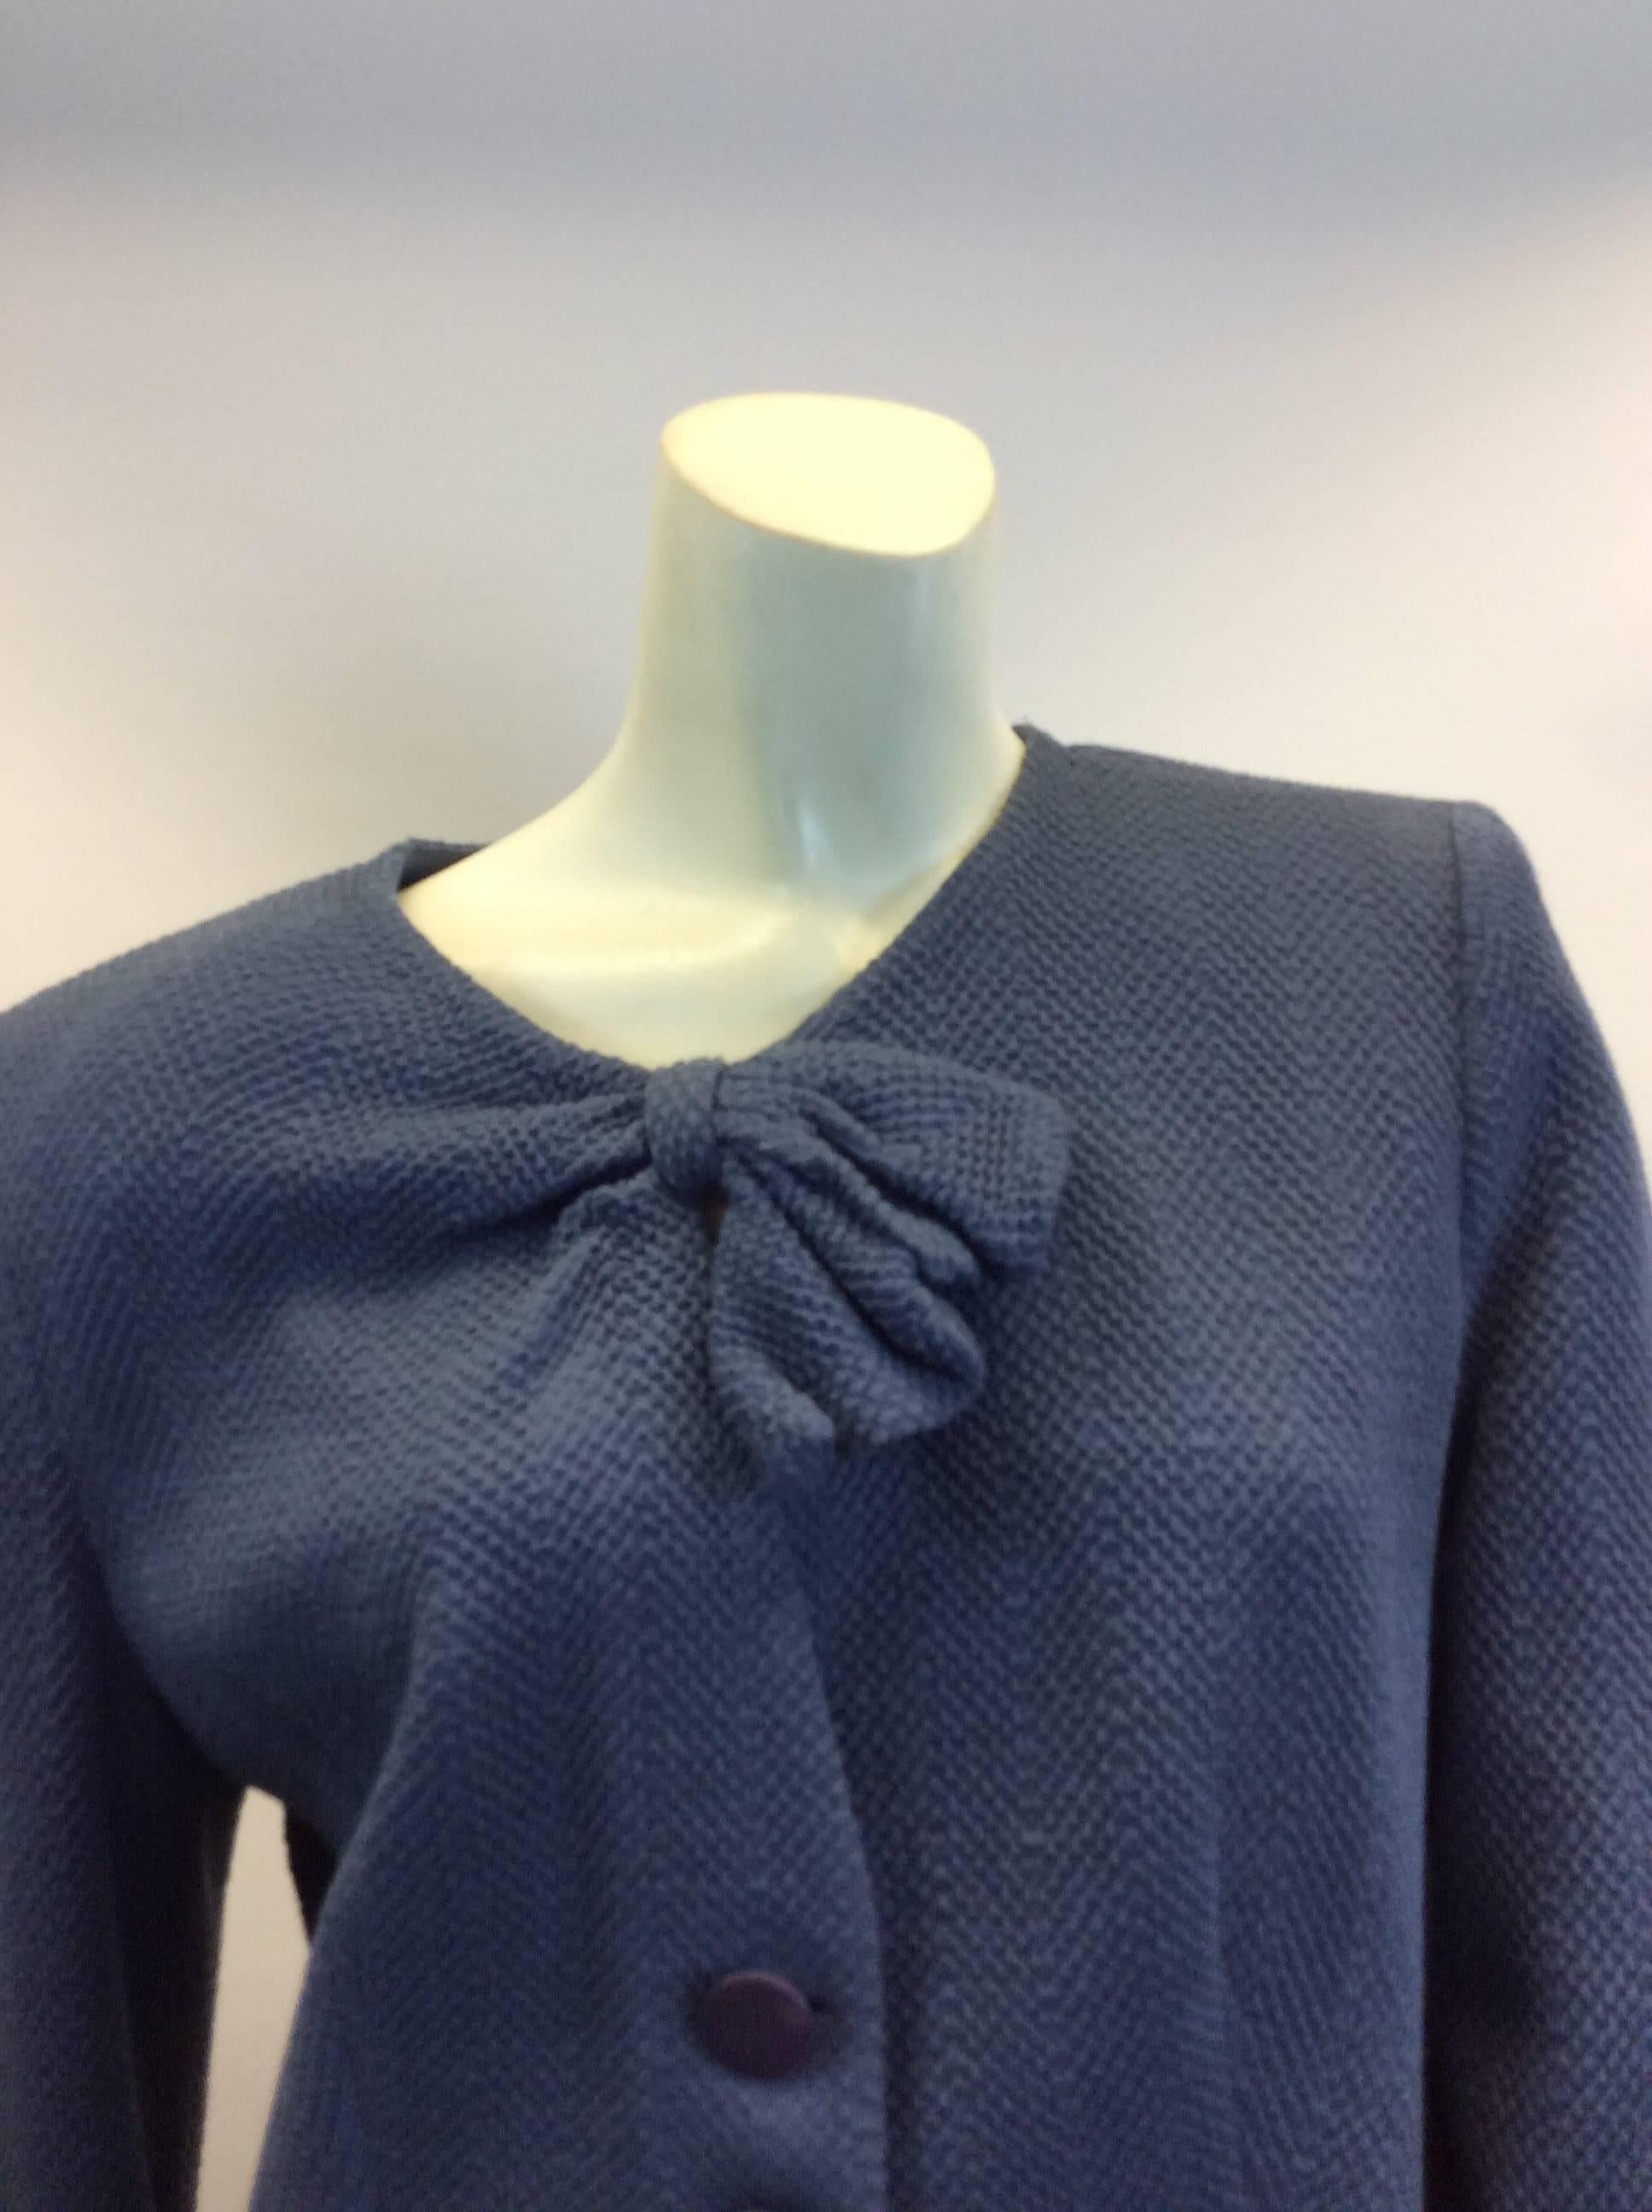 Armani Blue Bow Jacket
$136
Made in Italy
36% viscose 28% wool 27% acrylic 8% nylon 1% elastane
Bow detail at neck
